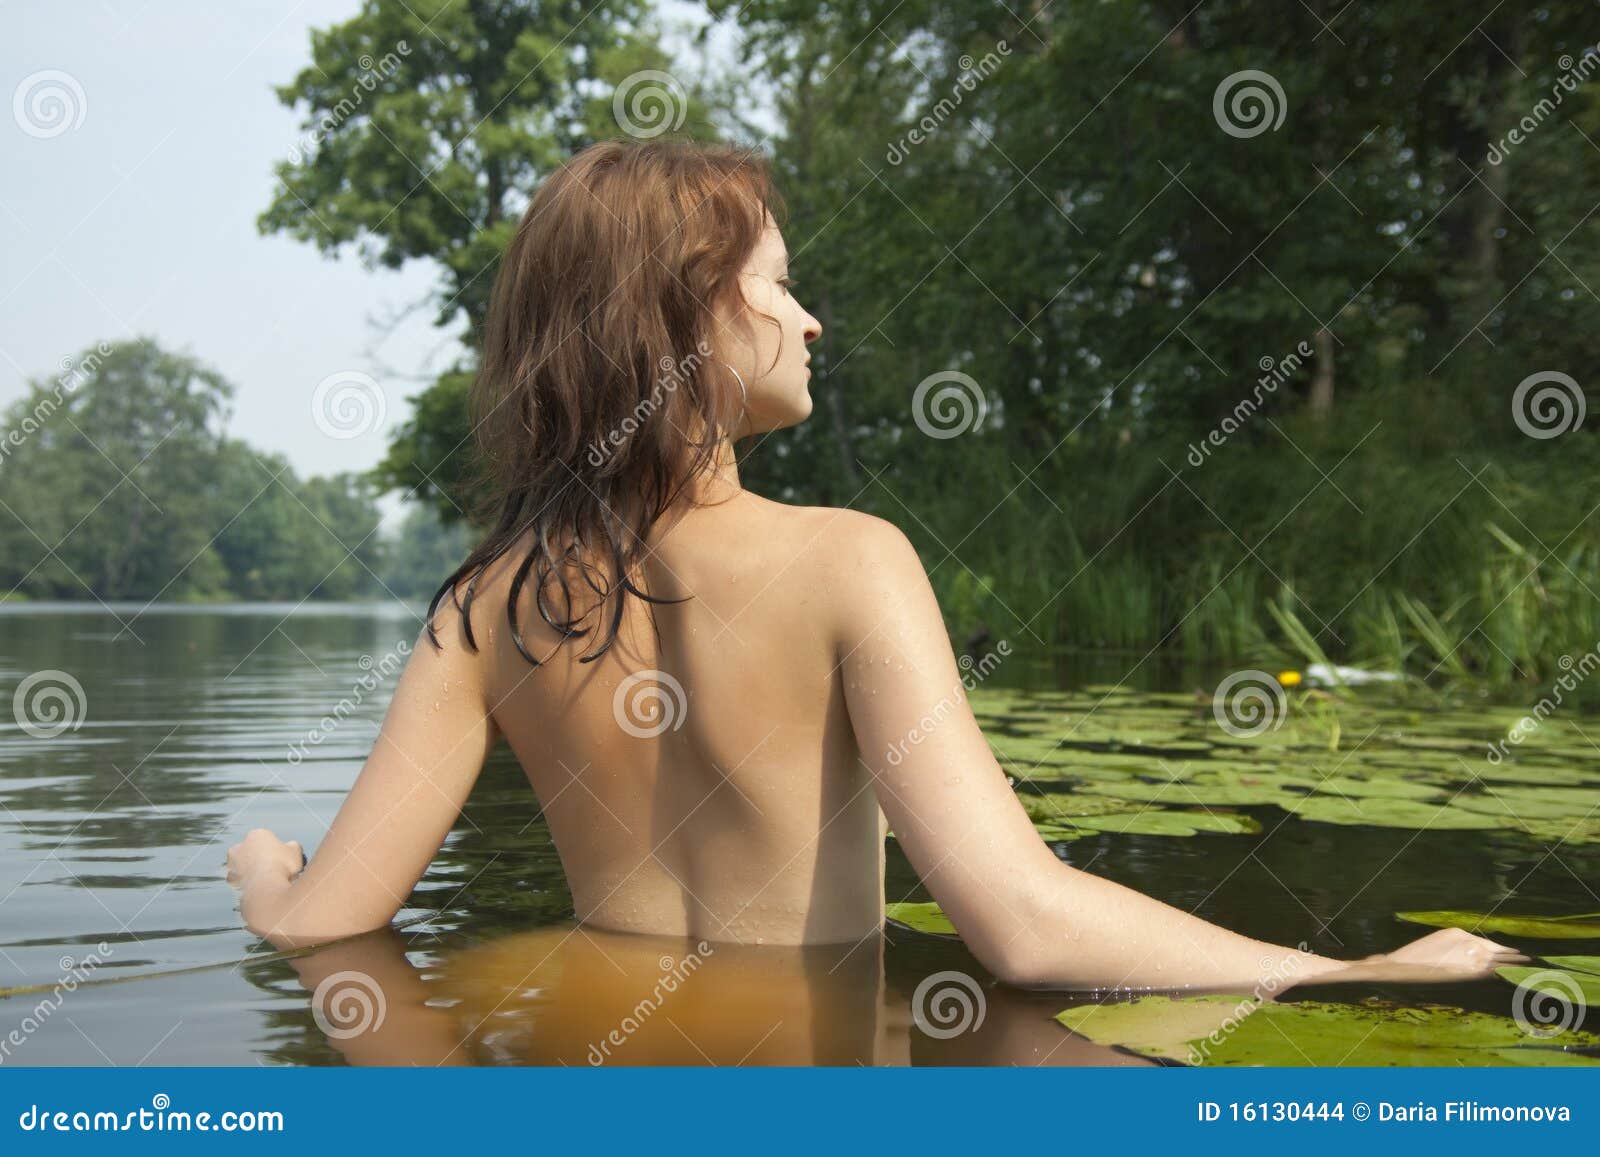 darshika prasad recommends Topless At The Lake